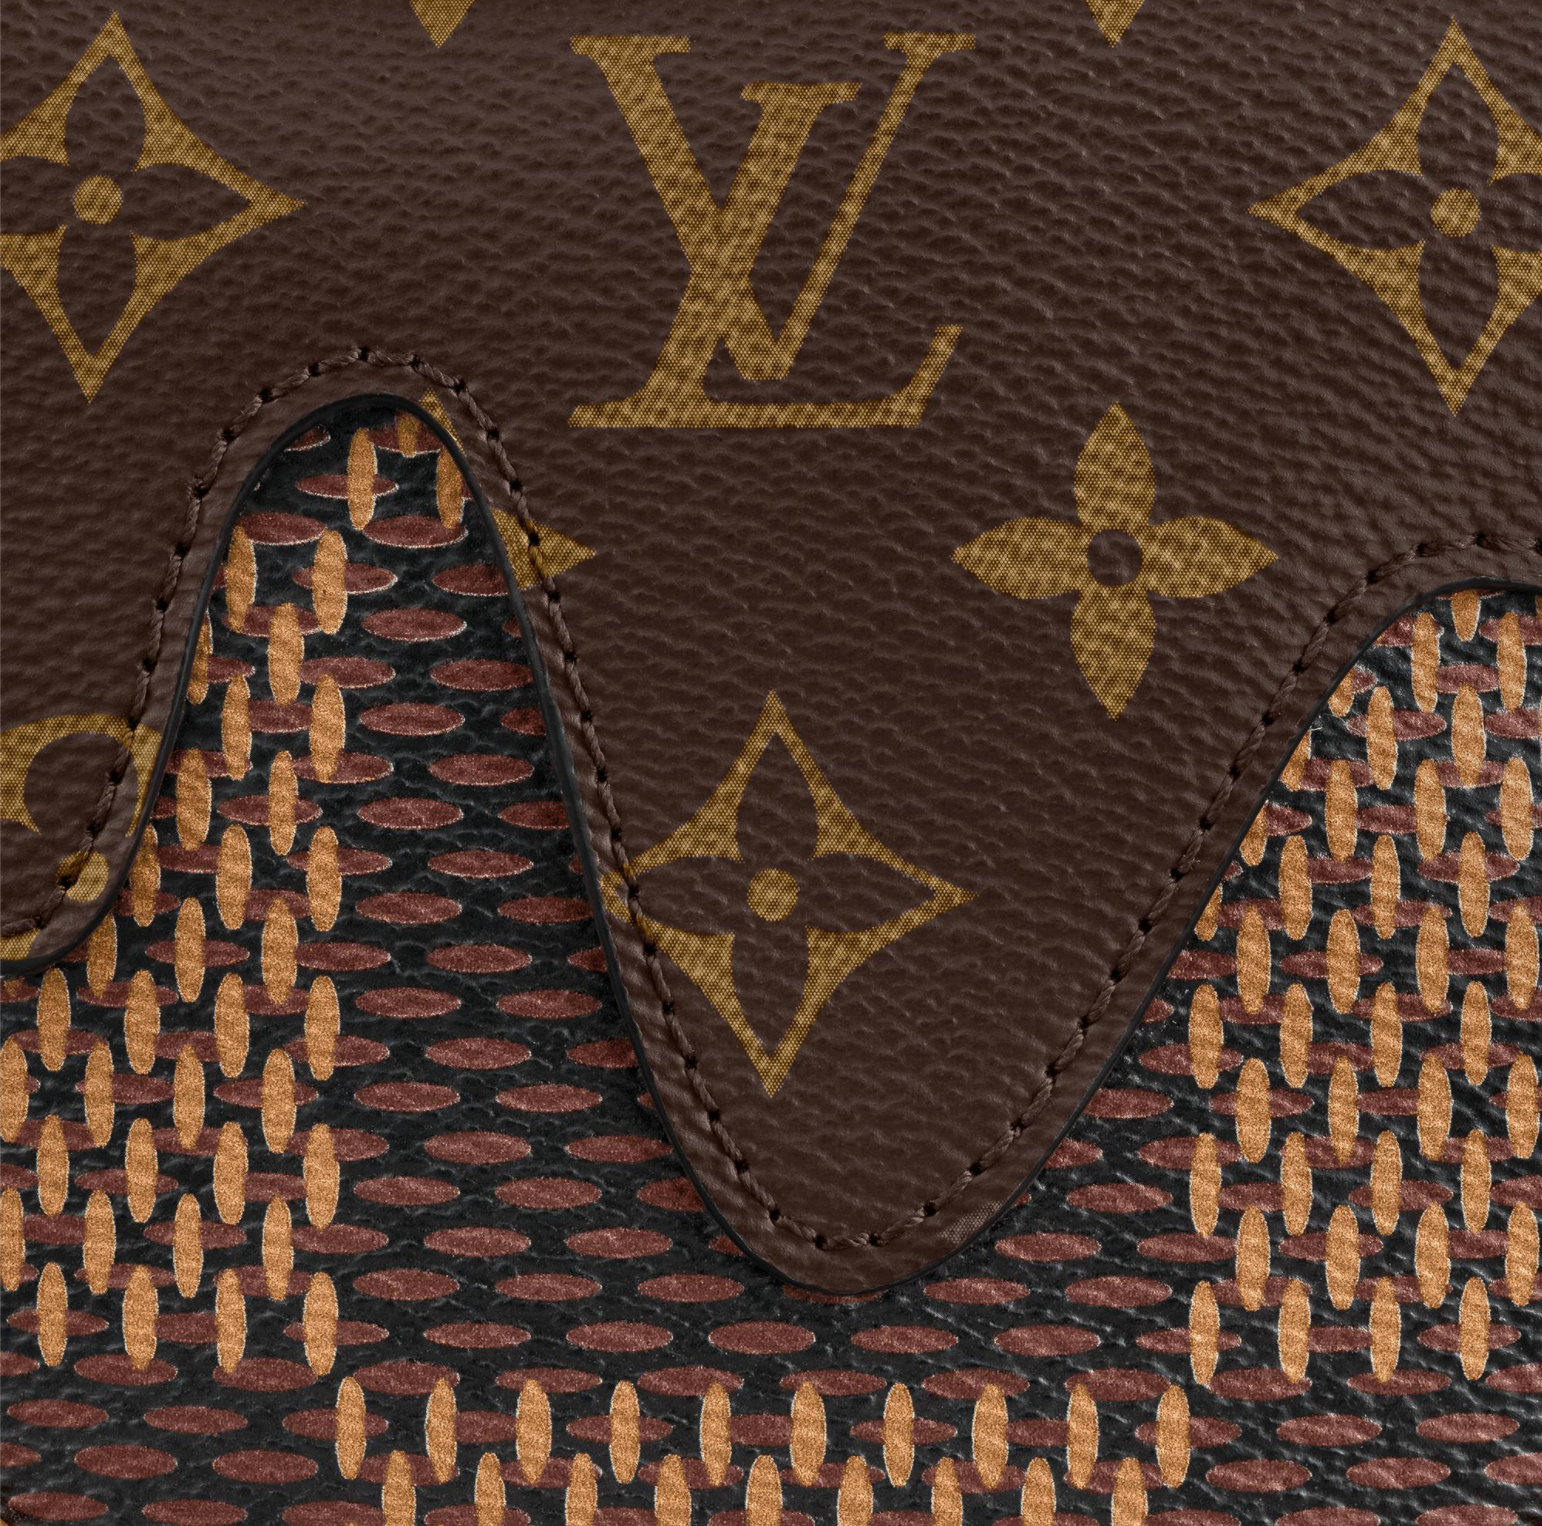 Louis Vuitton x Nigo e Sling Bag 